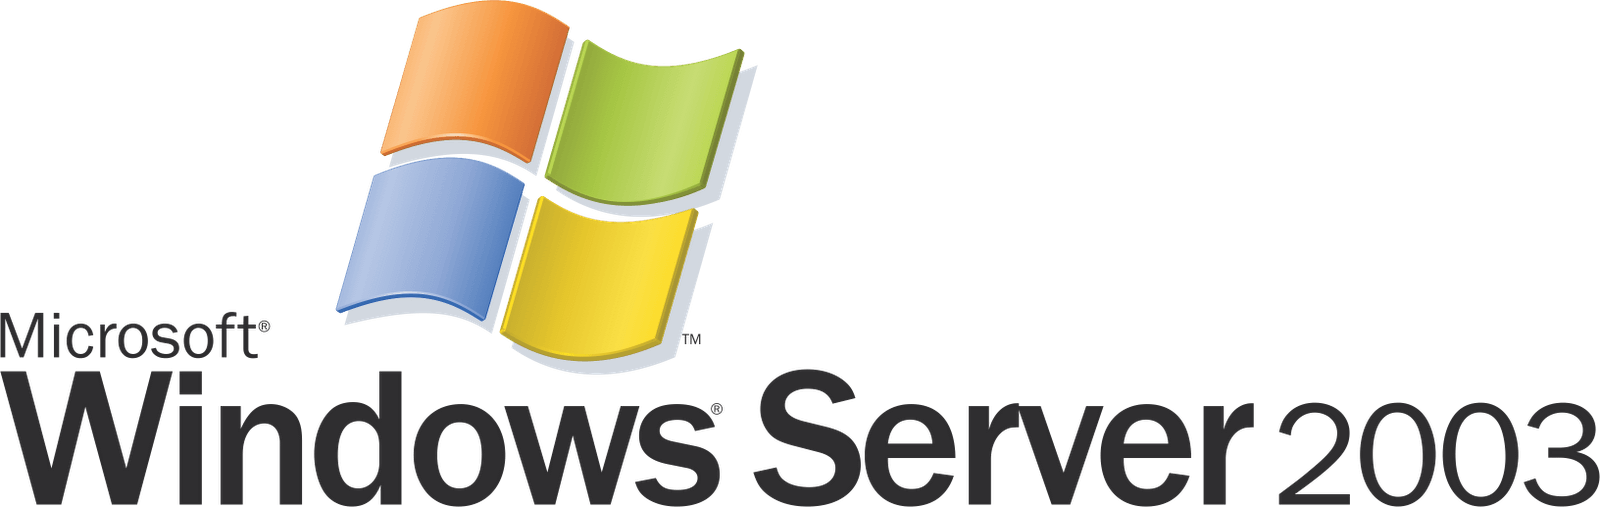 Windows Server 2003 Logo - Windows Server 2003 Logo Image - Free Logo Png